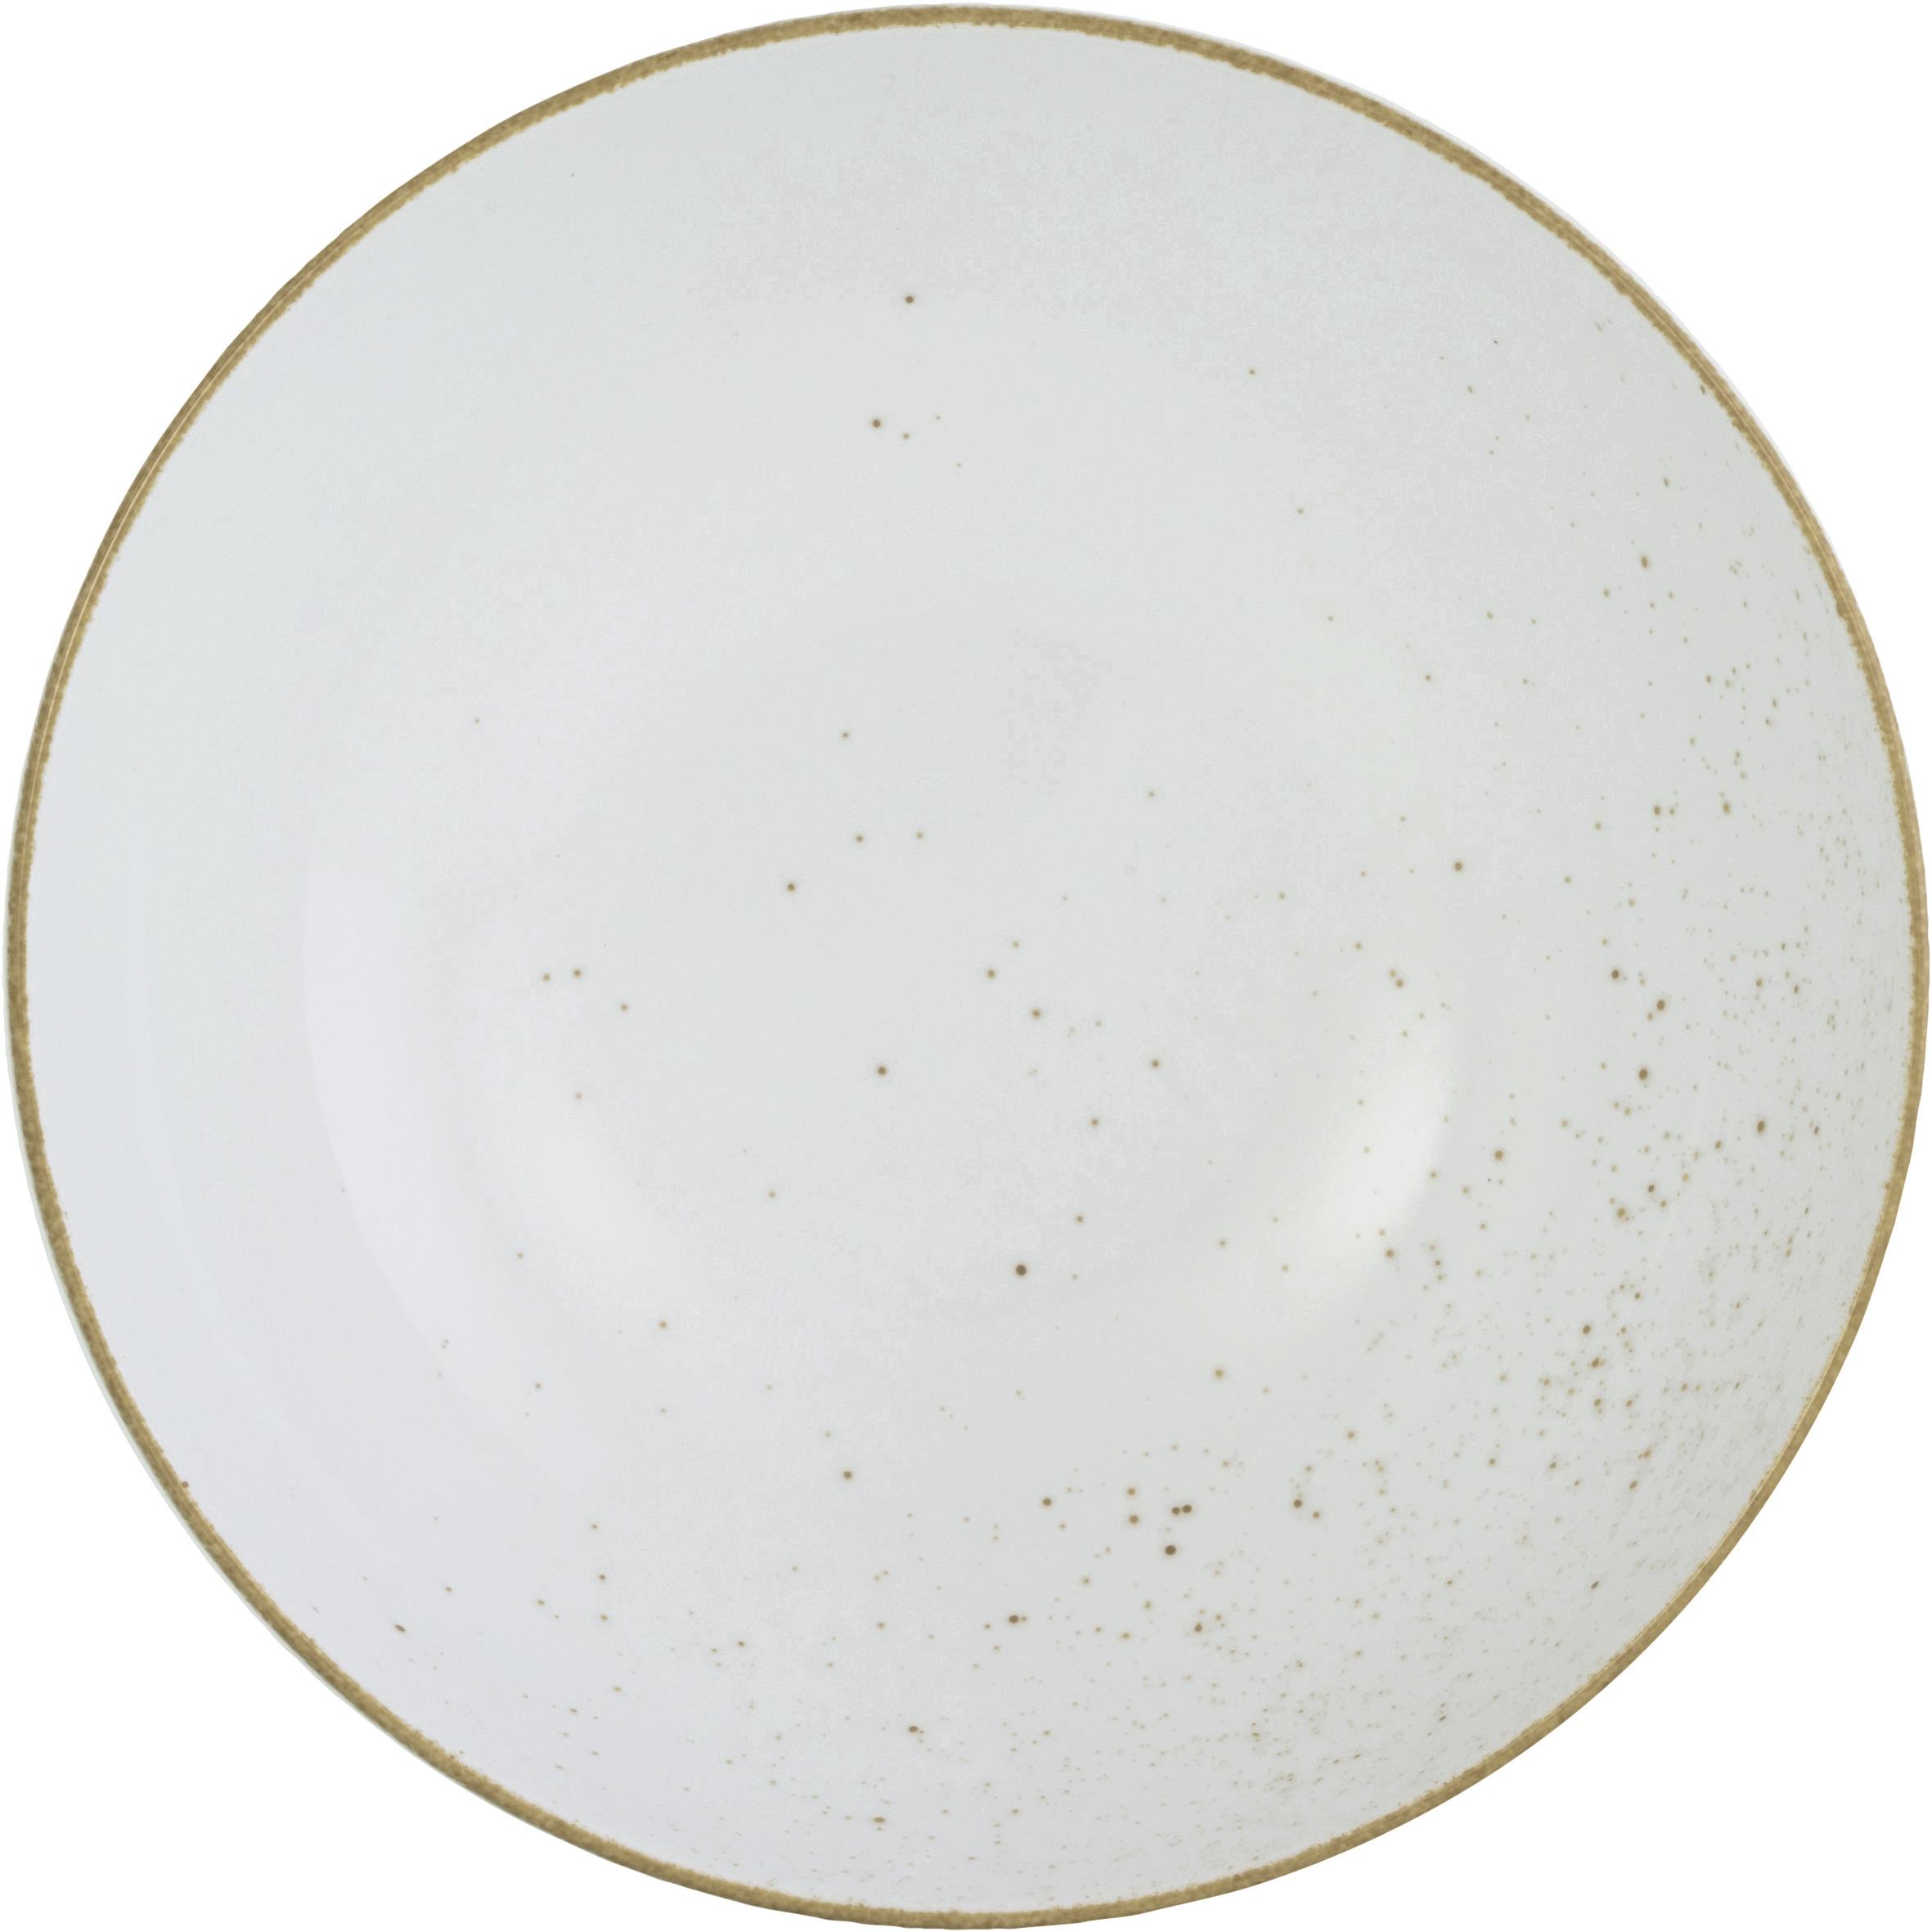 Schale Capri in Weiß - Weiß, MODERN, Keramik (20/20/5cm) - Premium Living